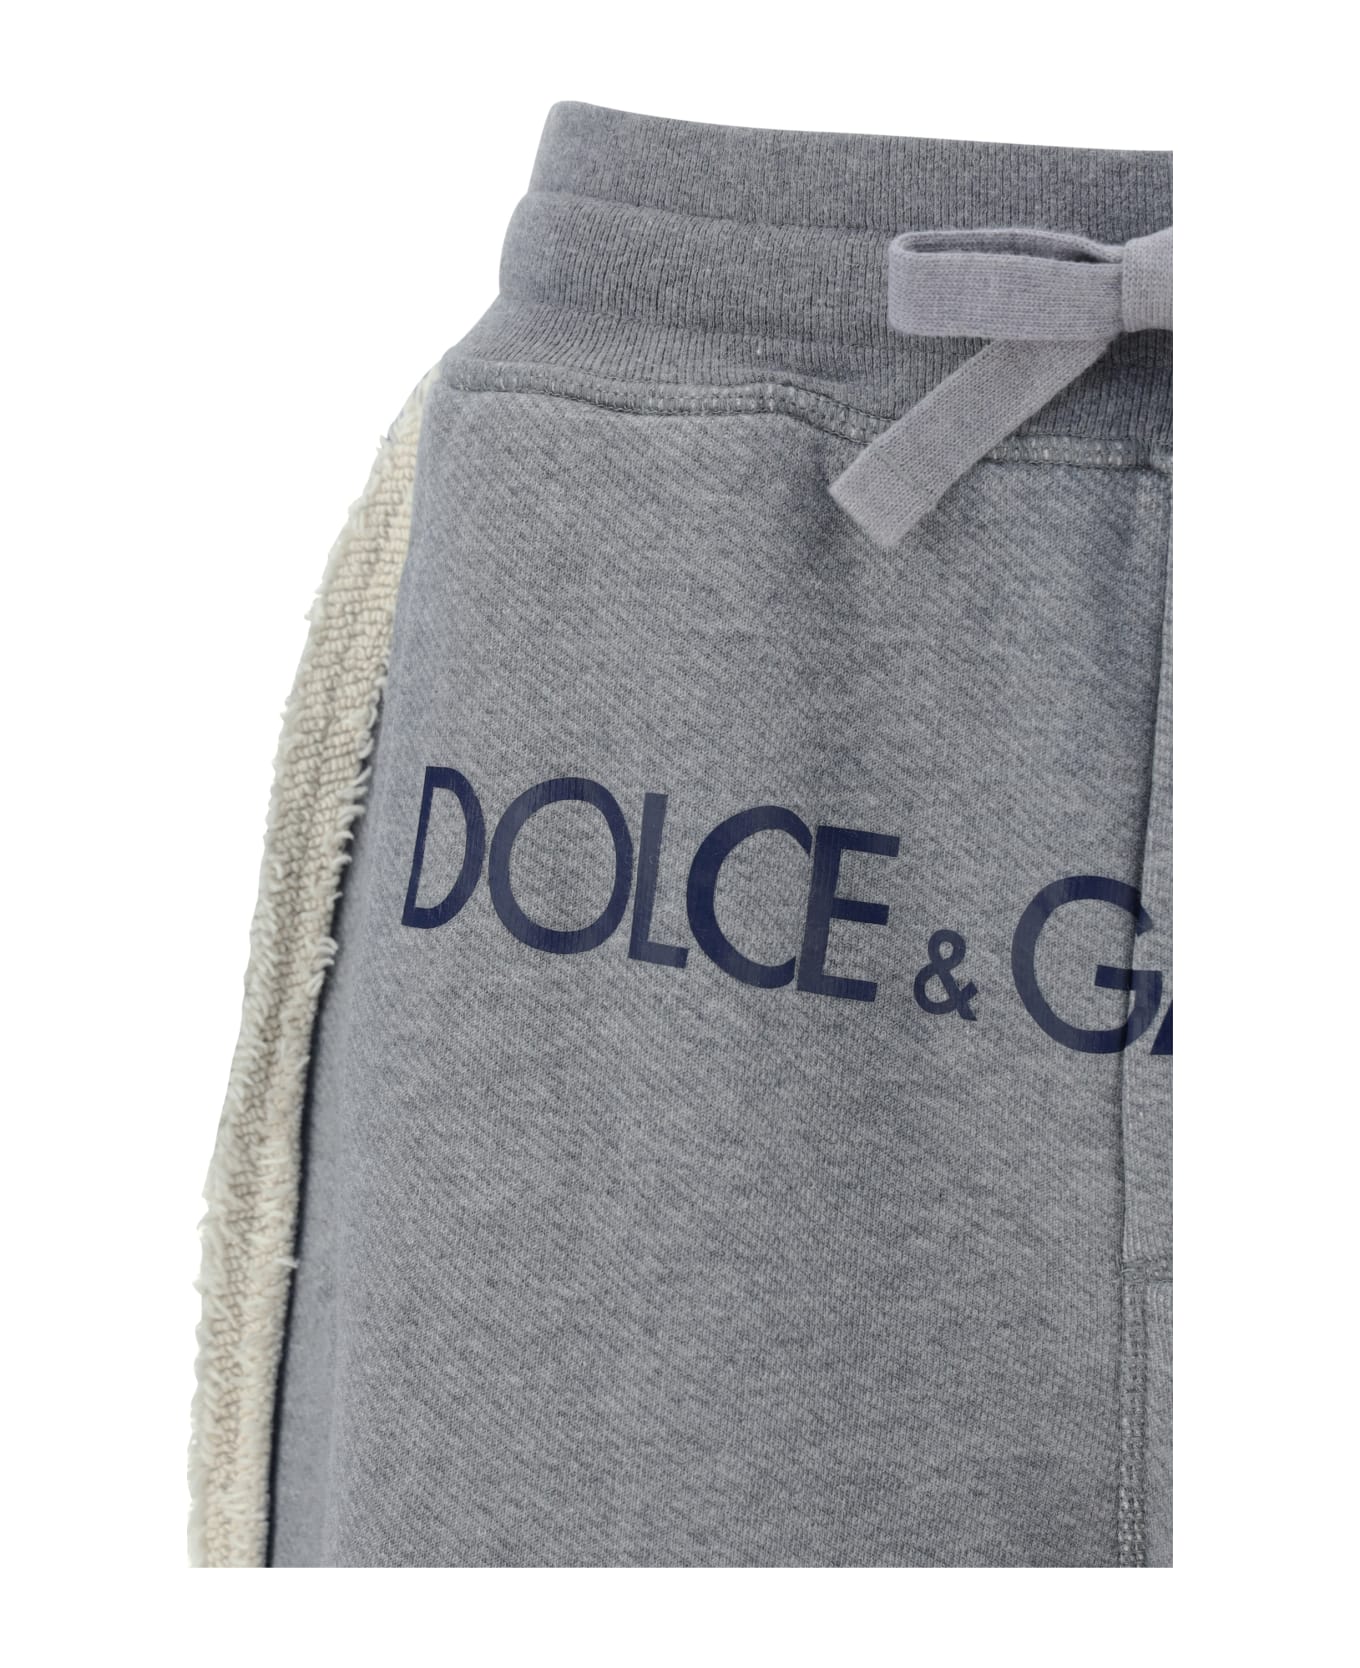 Dolce & Gabbana Sweatpants - Melange Grigio